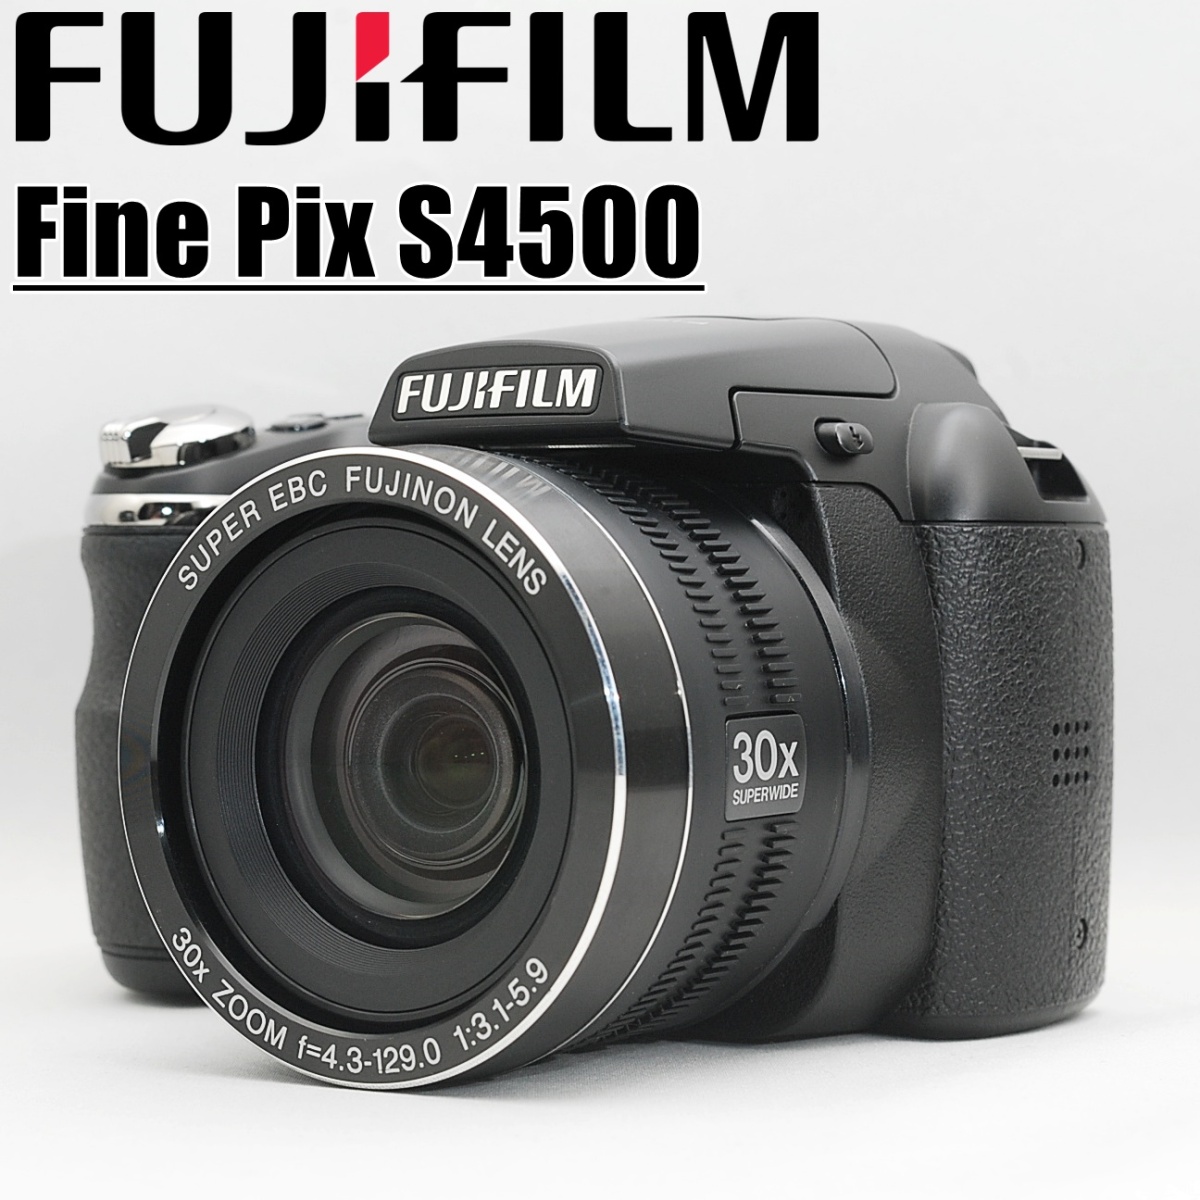 FUJIFILM FinePix S4500 1400万画素 30倍ズームレンズ 電子ビュー搭載